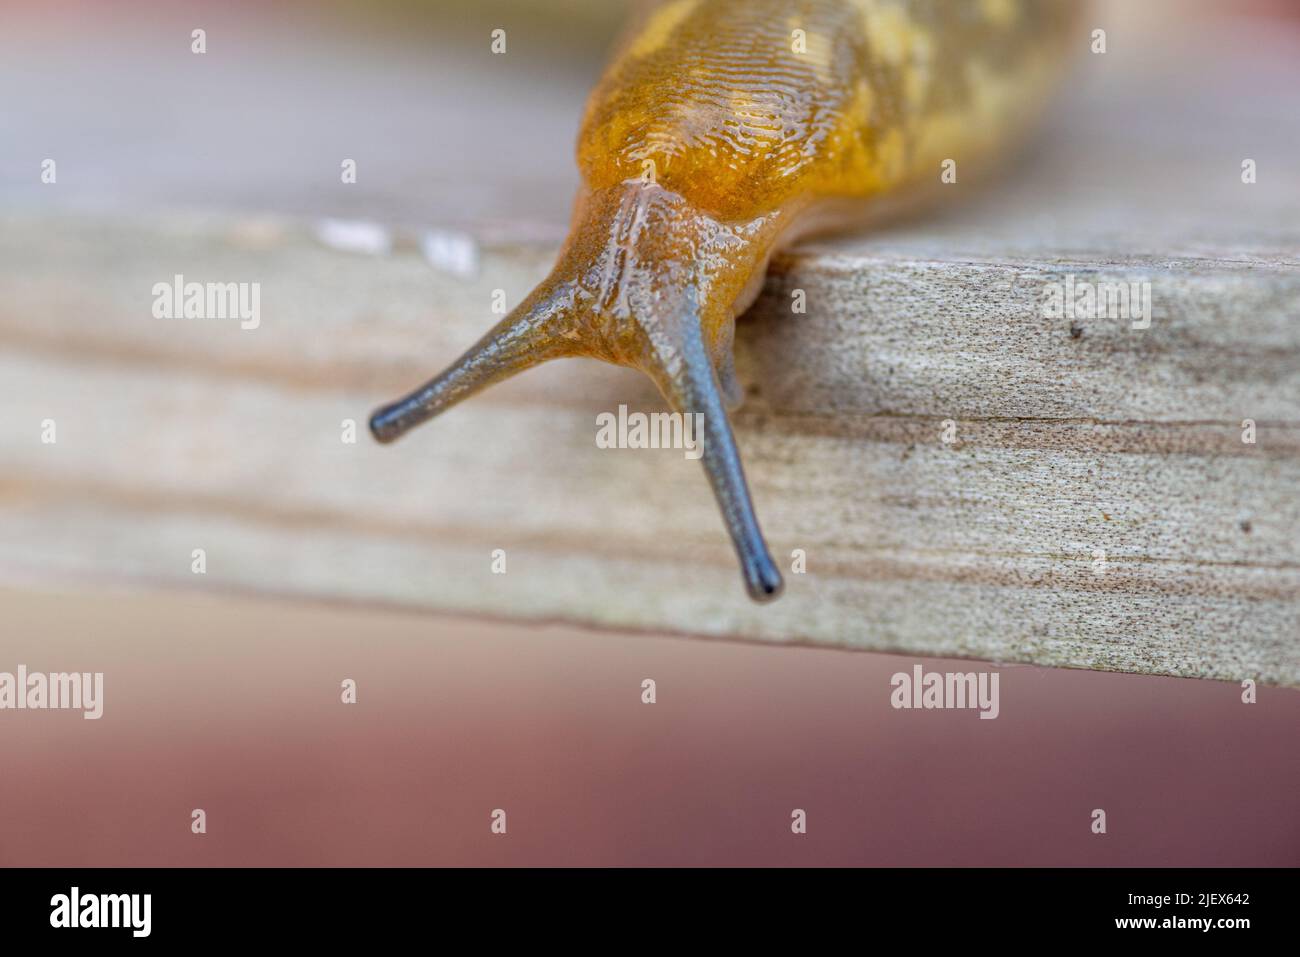 Garden slug (gastropod mollusc) Stock Photo